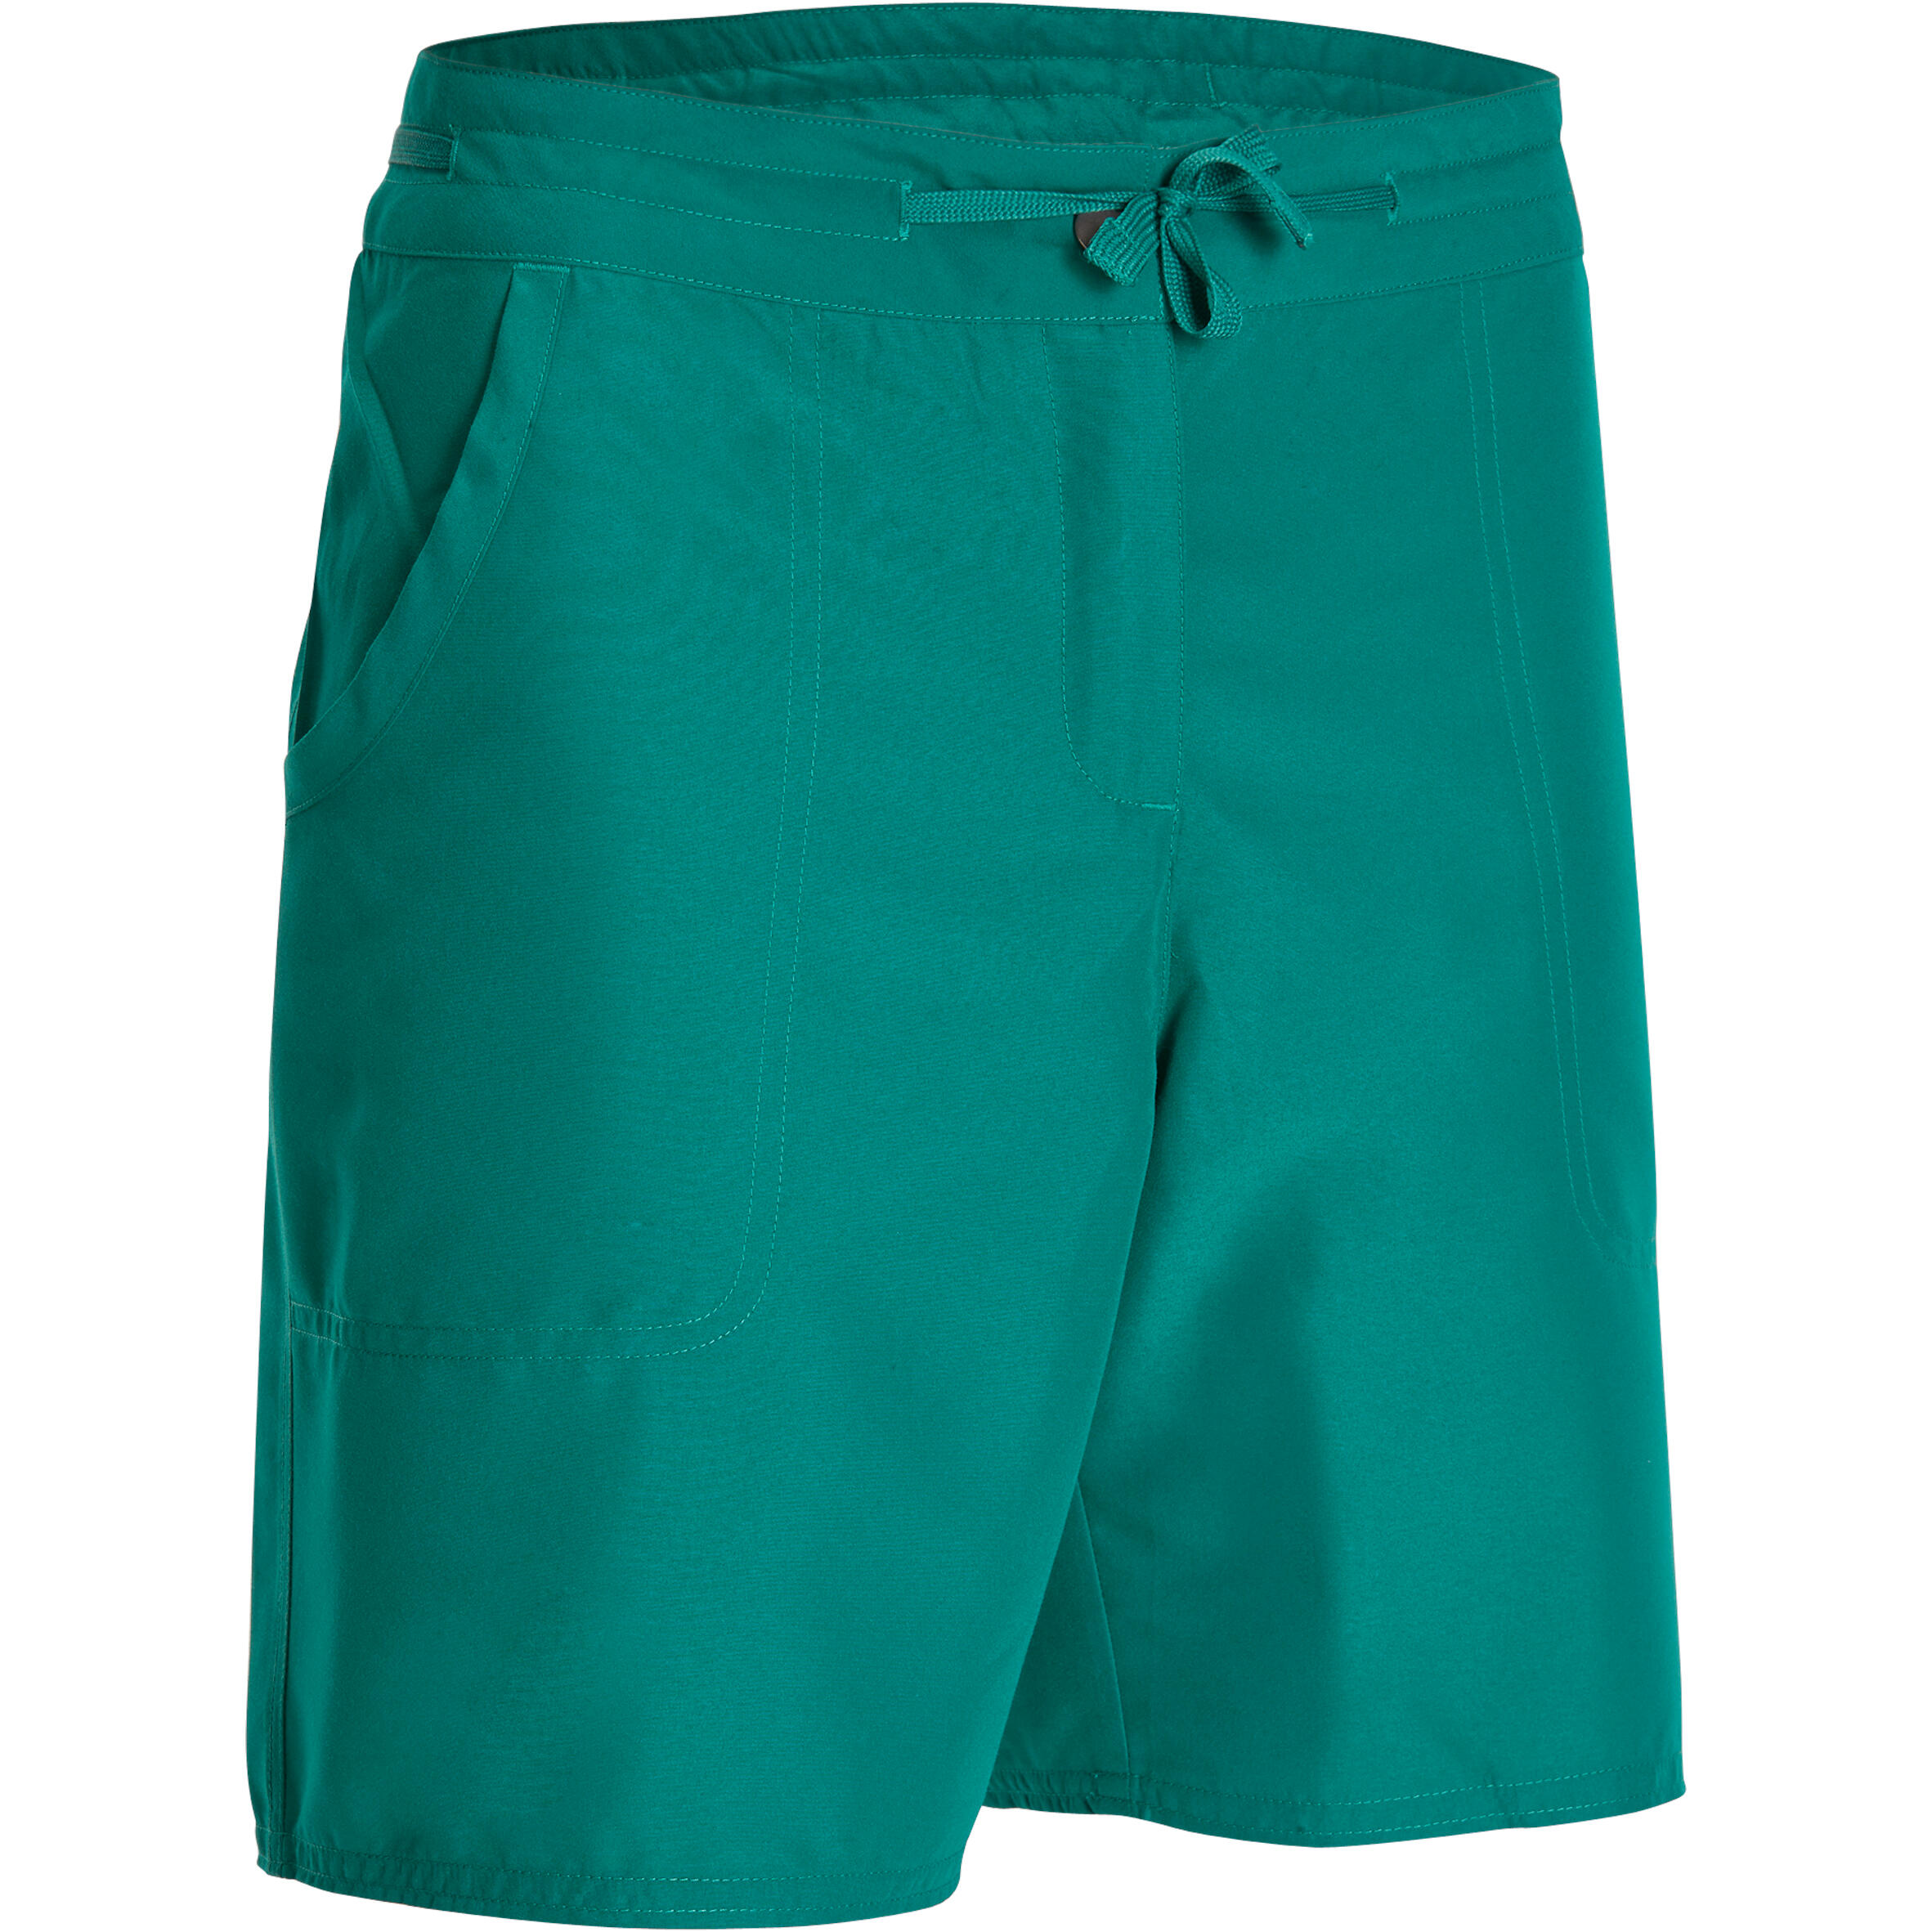 decathlon shorts for ladies